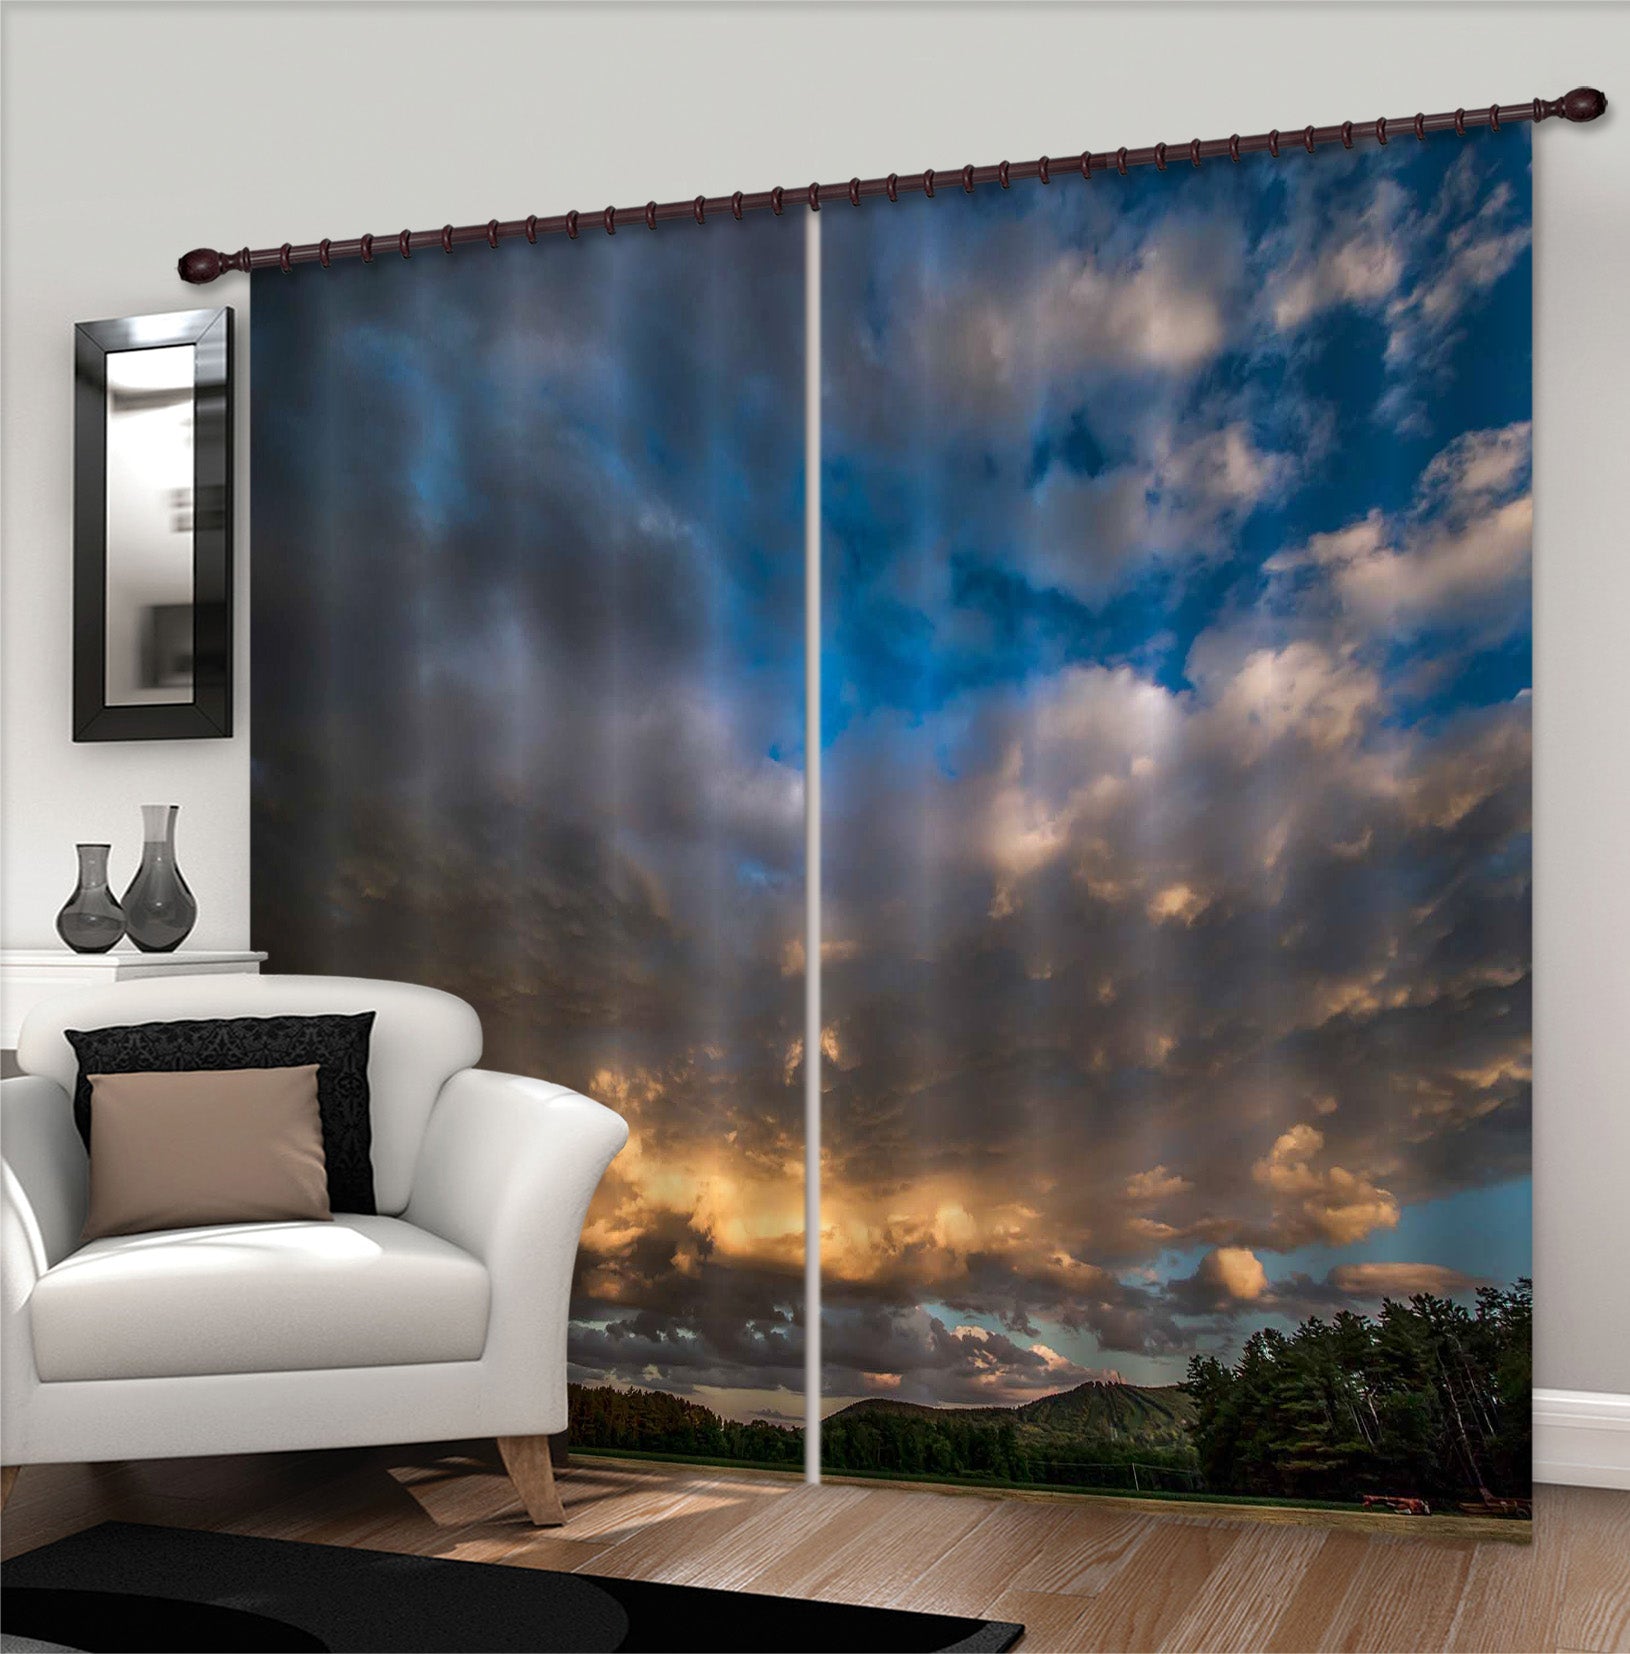 3D Sky 86055 Jerry LoFaro Curtain Curtains Drapes